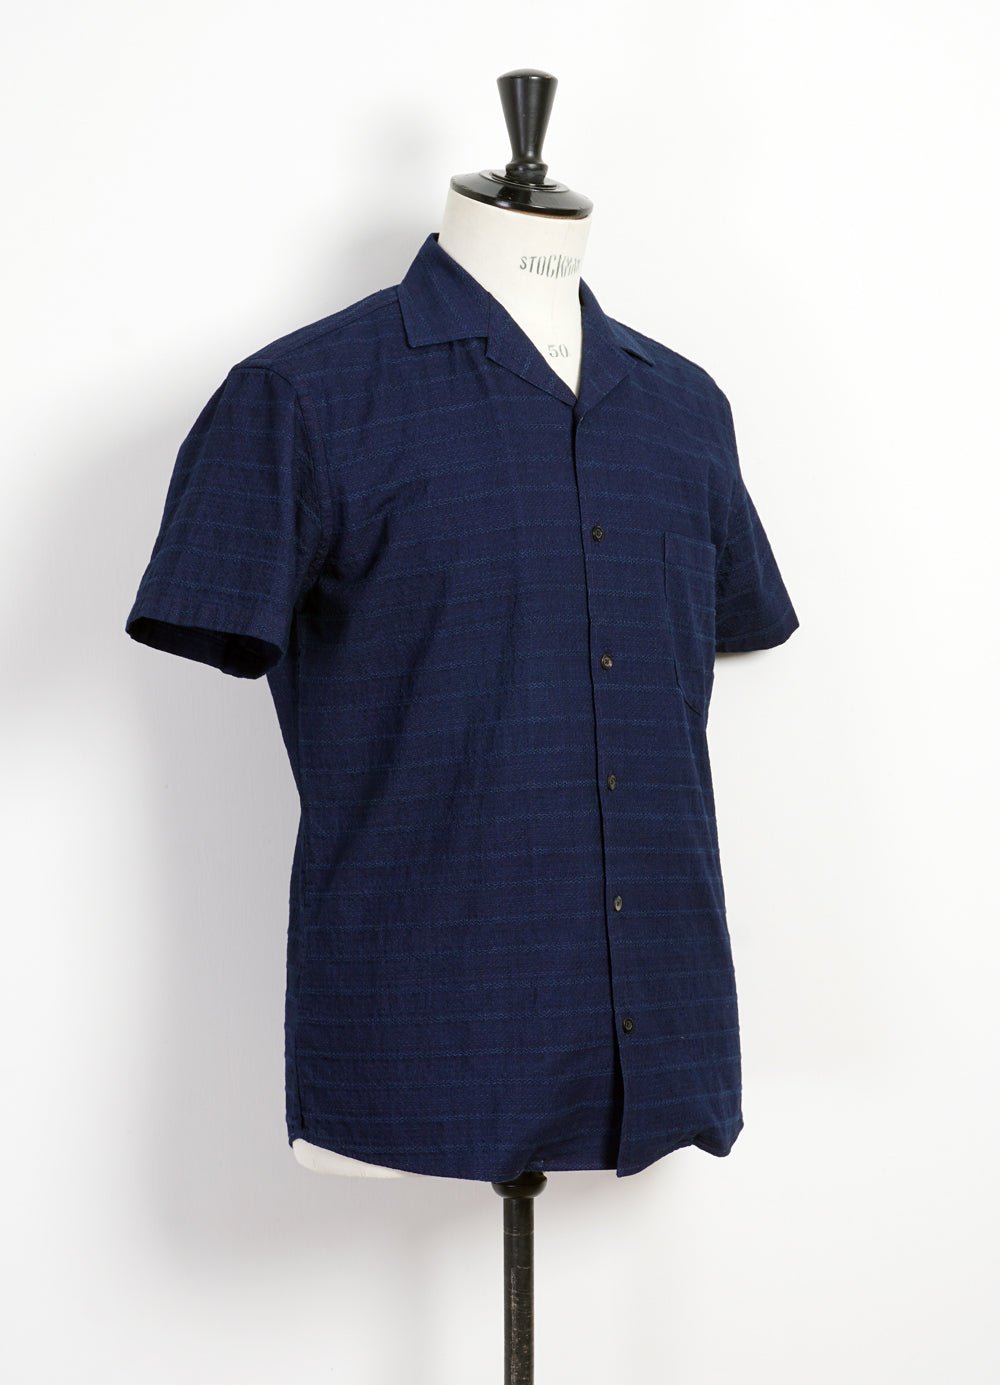 HANSEN GARMENTS - JONNY | Short Sleeve Shirt | Dobby Indigo - HANSEN Garments